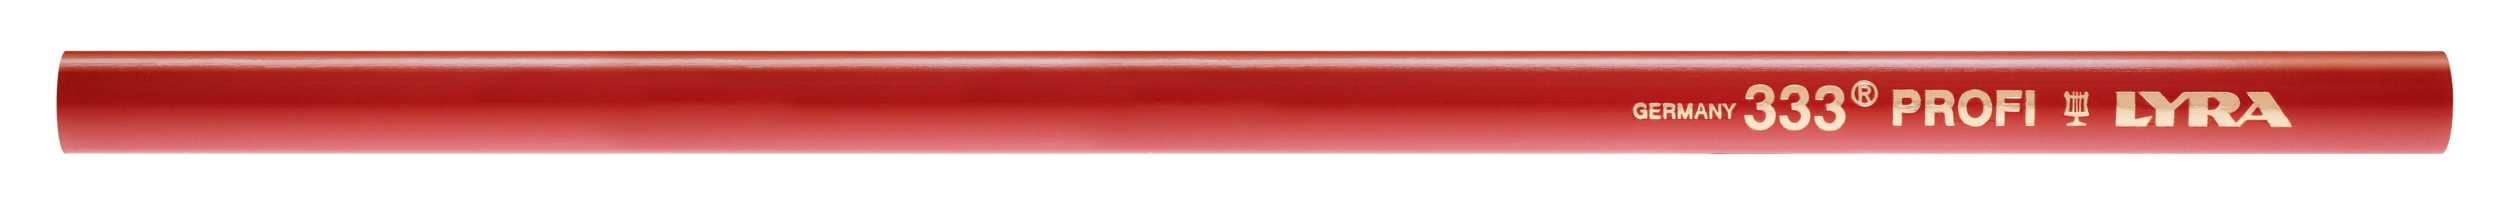 crayon-charpentier-rouge-30-z